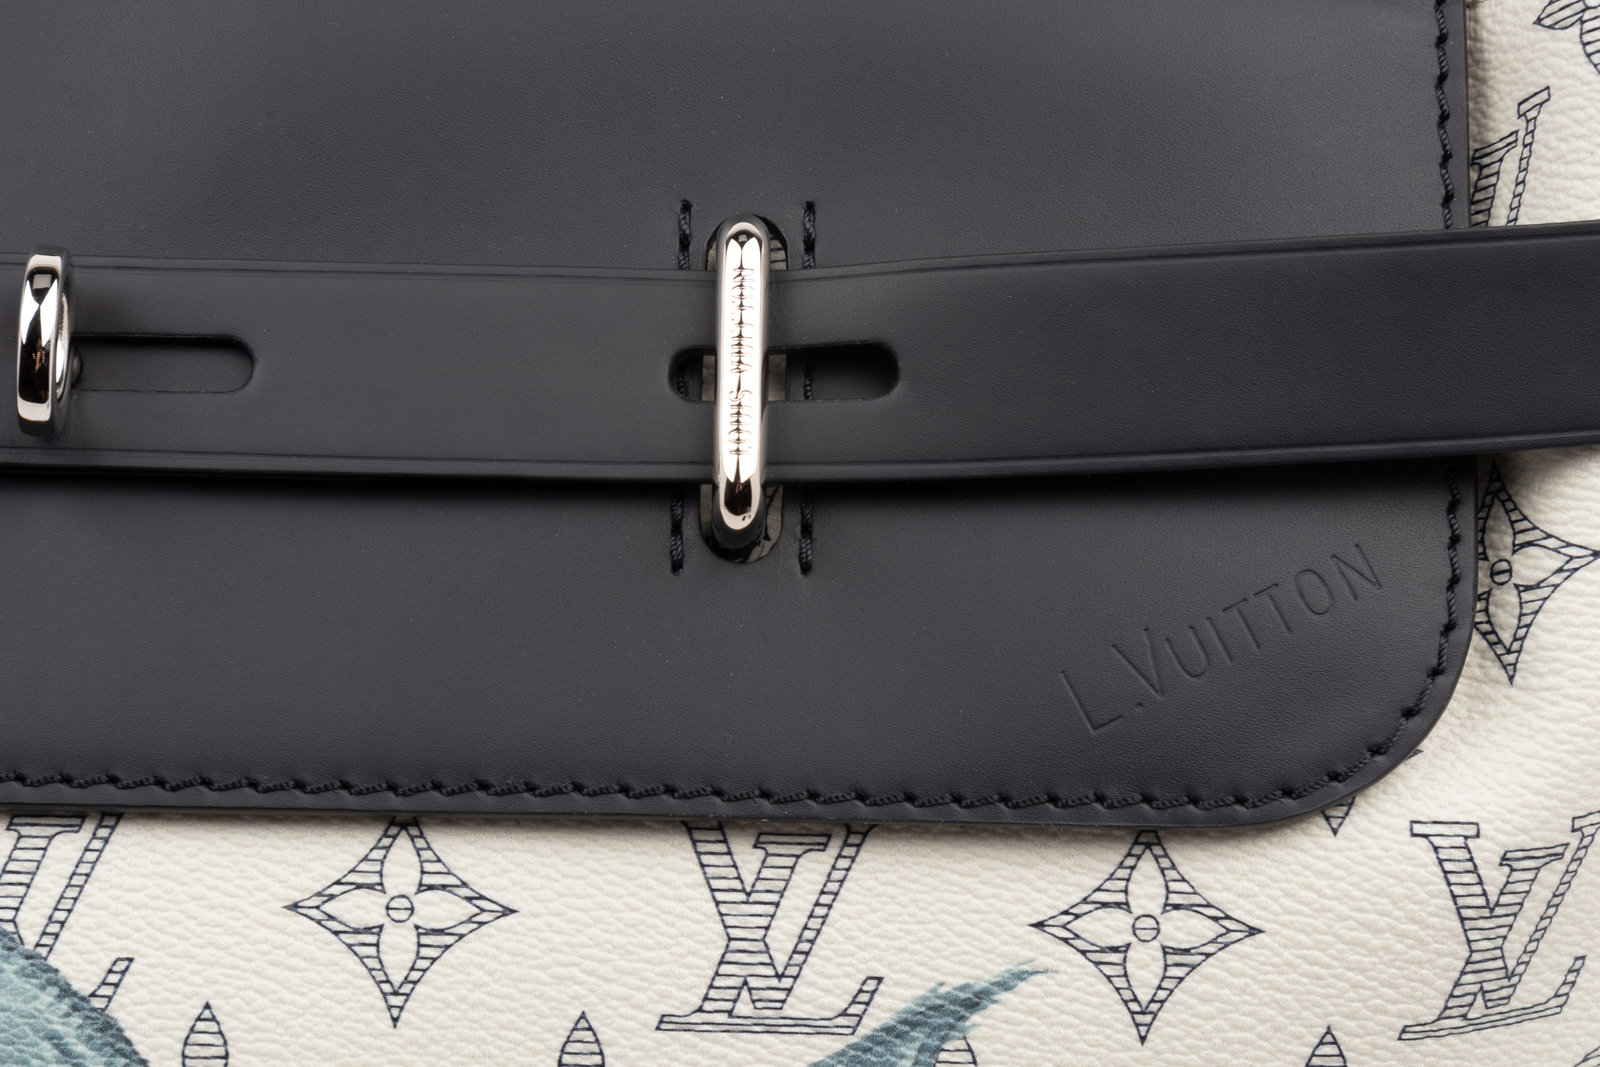 Louis Vuitton Steamer Backpack Chapman Savane Monogram Chapman Ink